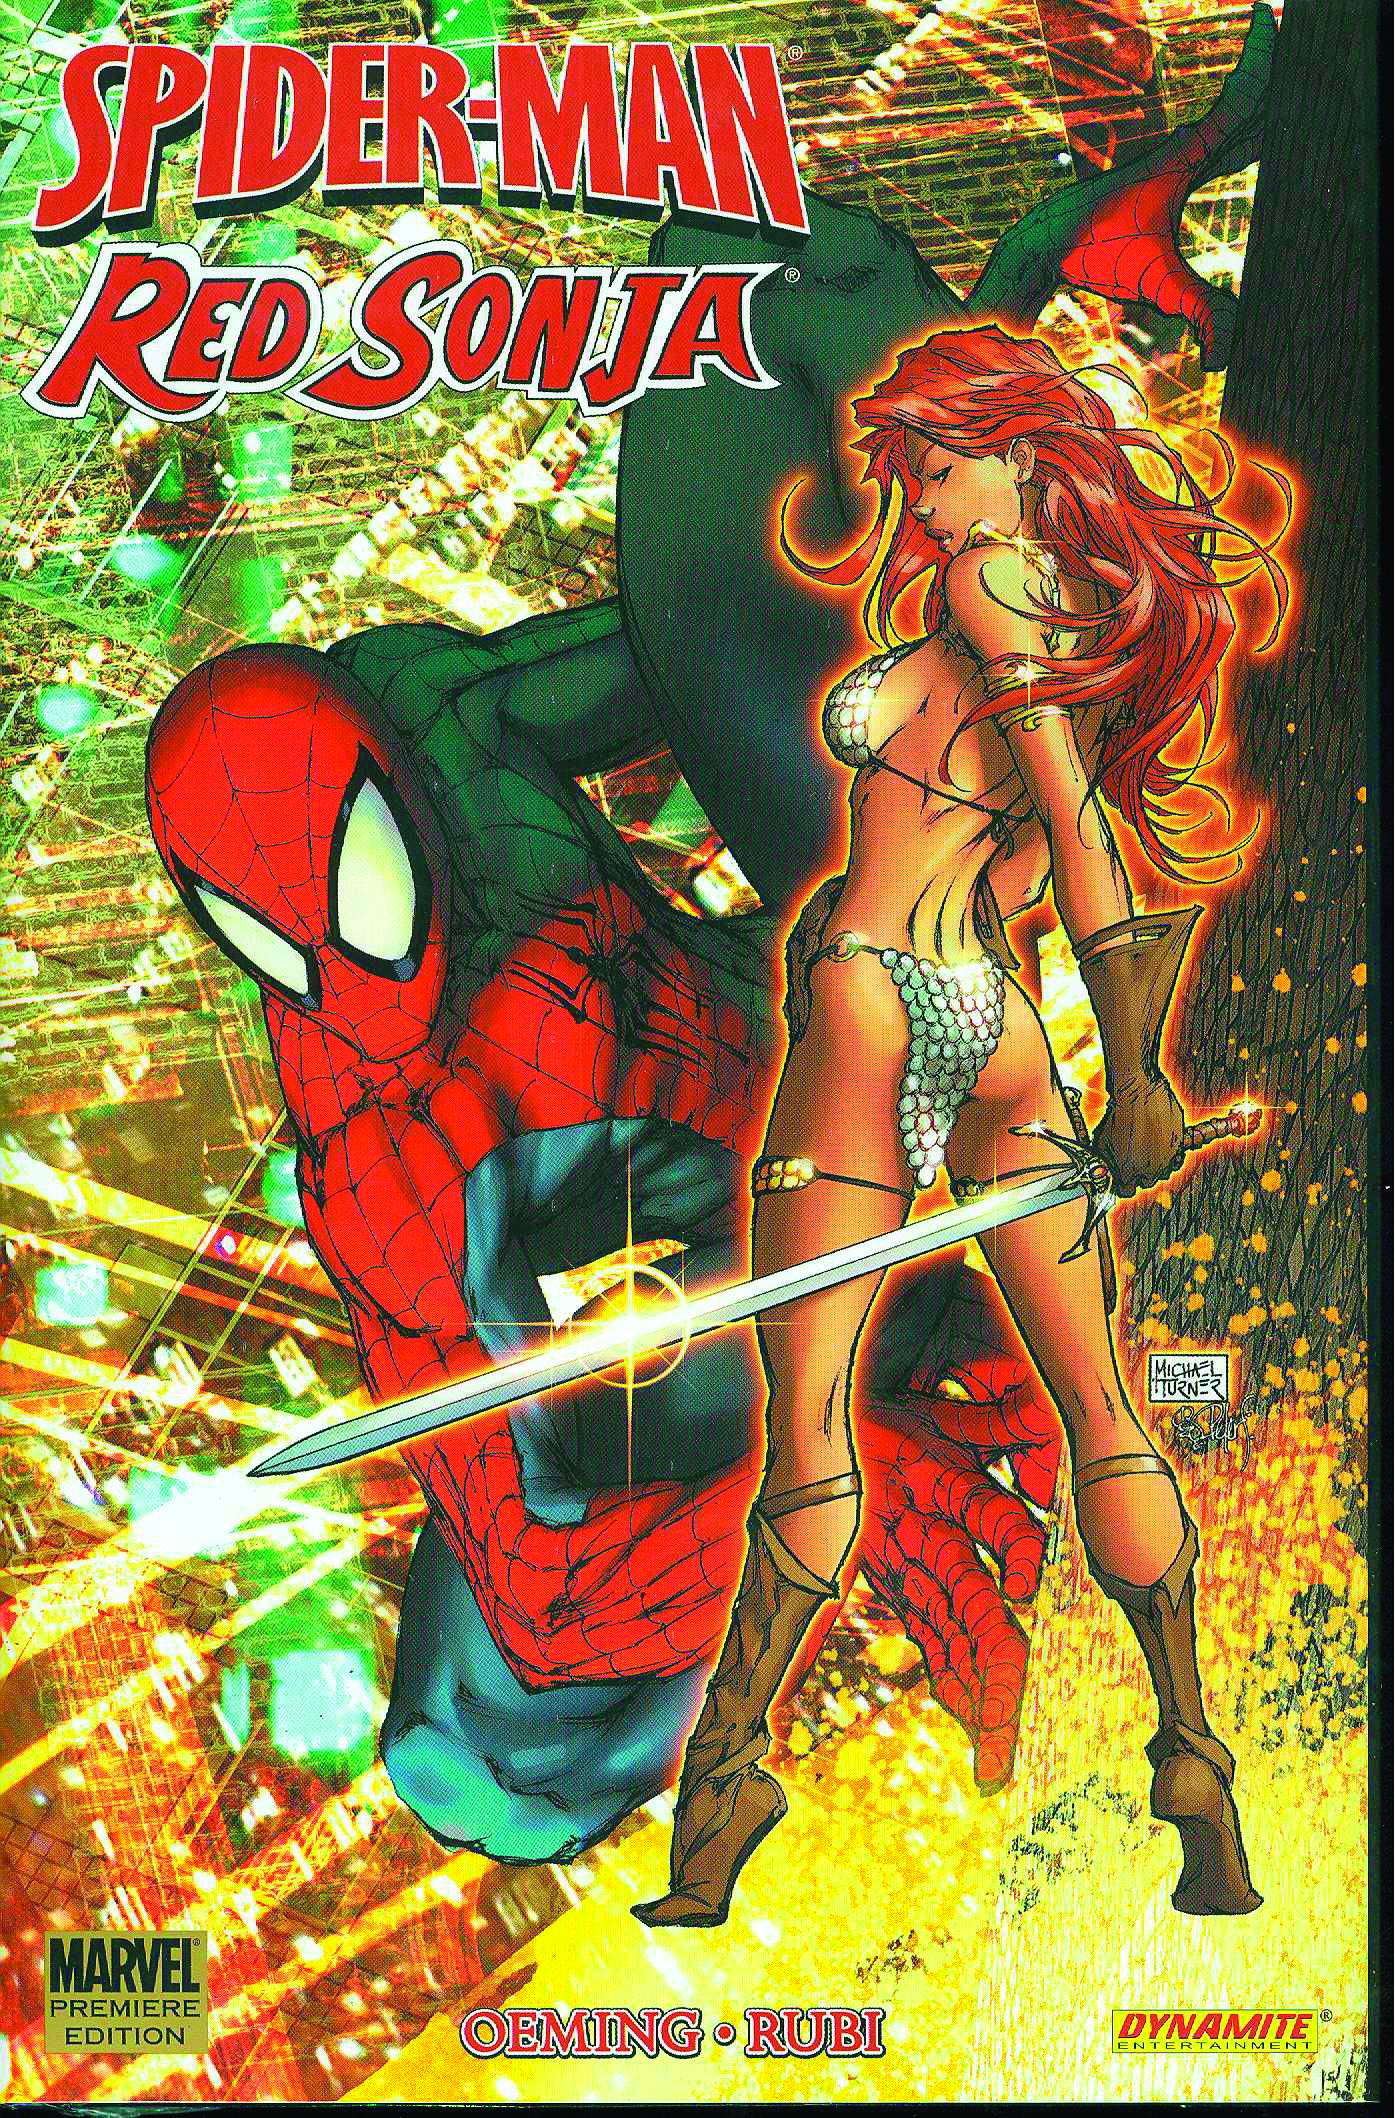 Spider-Man Red Sonja Premiere Hardcover